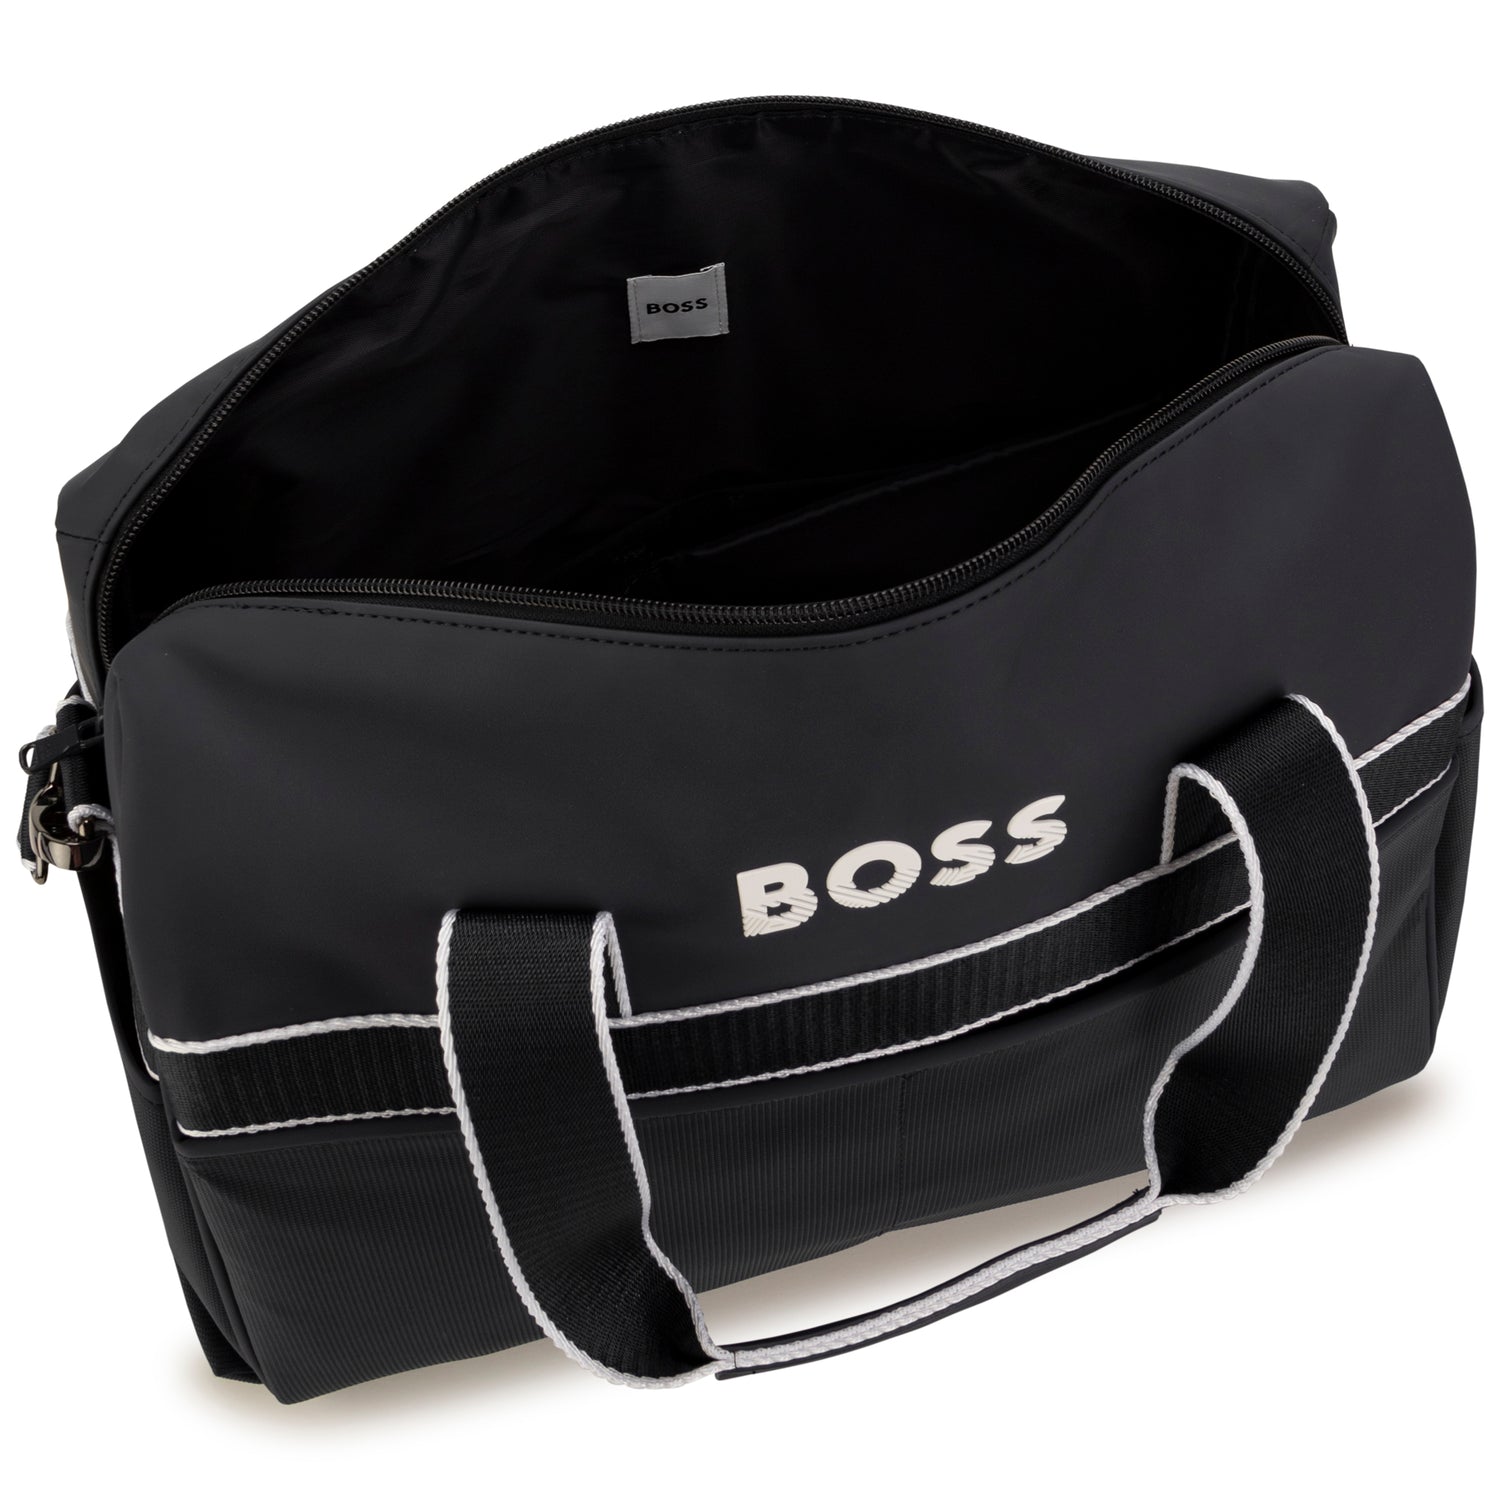 Boss Changing Bag Style: J90299